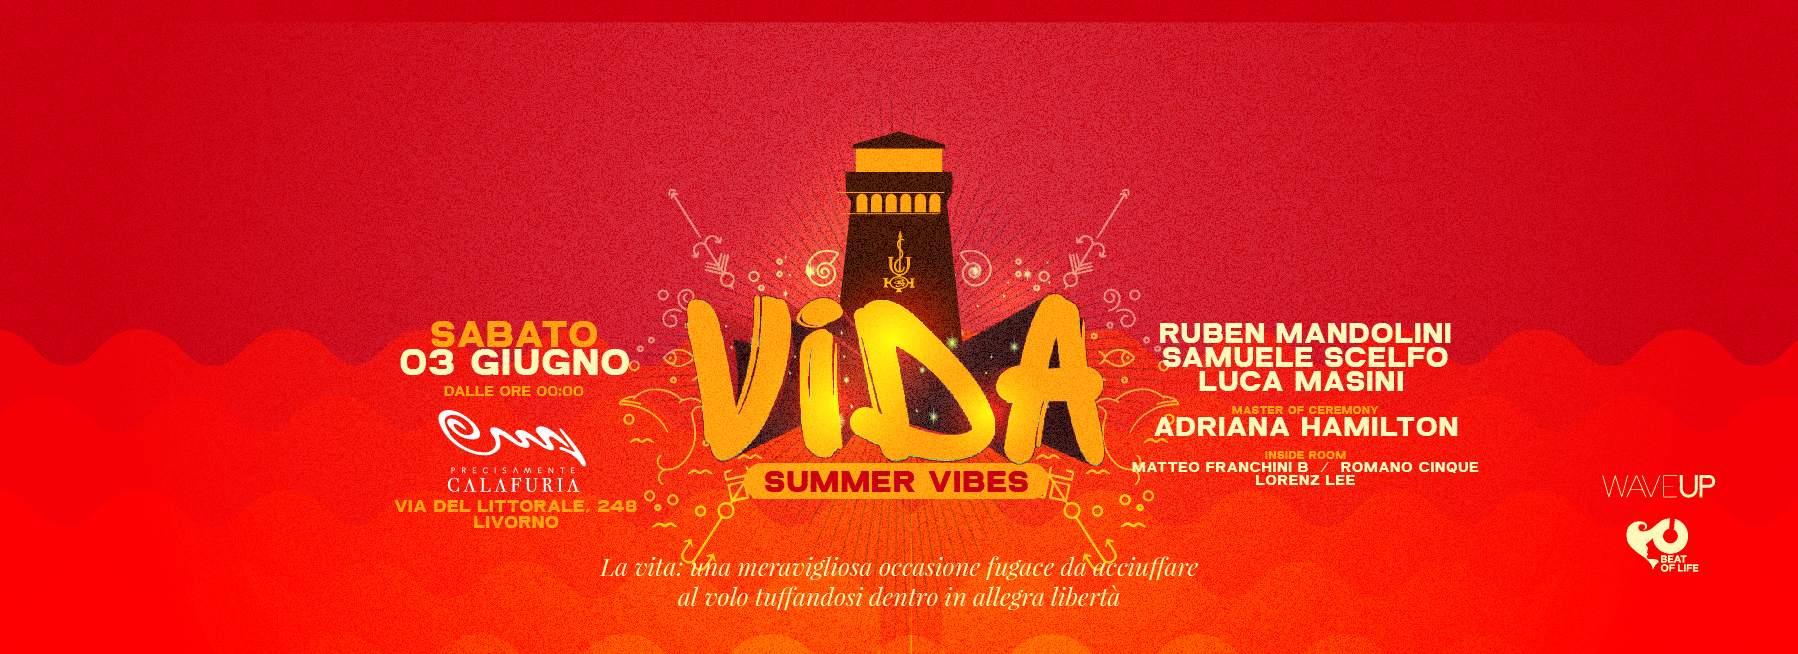 Vida Summer Vibes - week 2 - フライヤー表